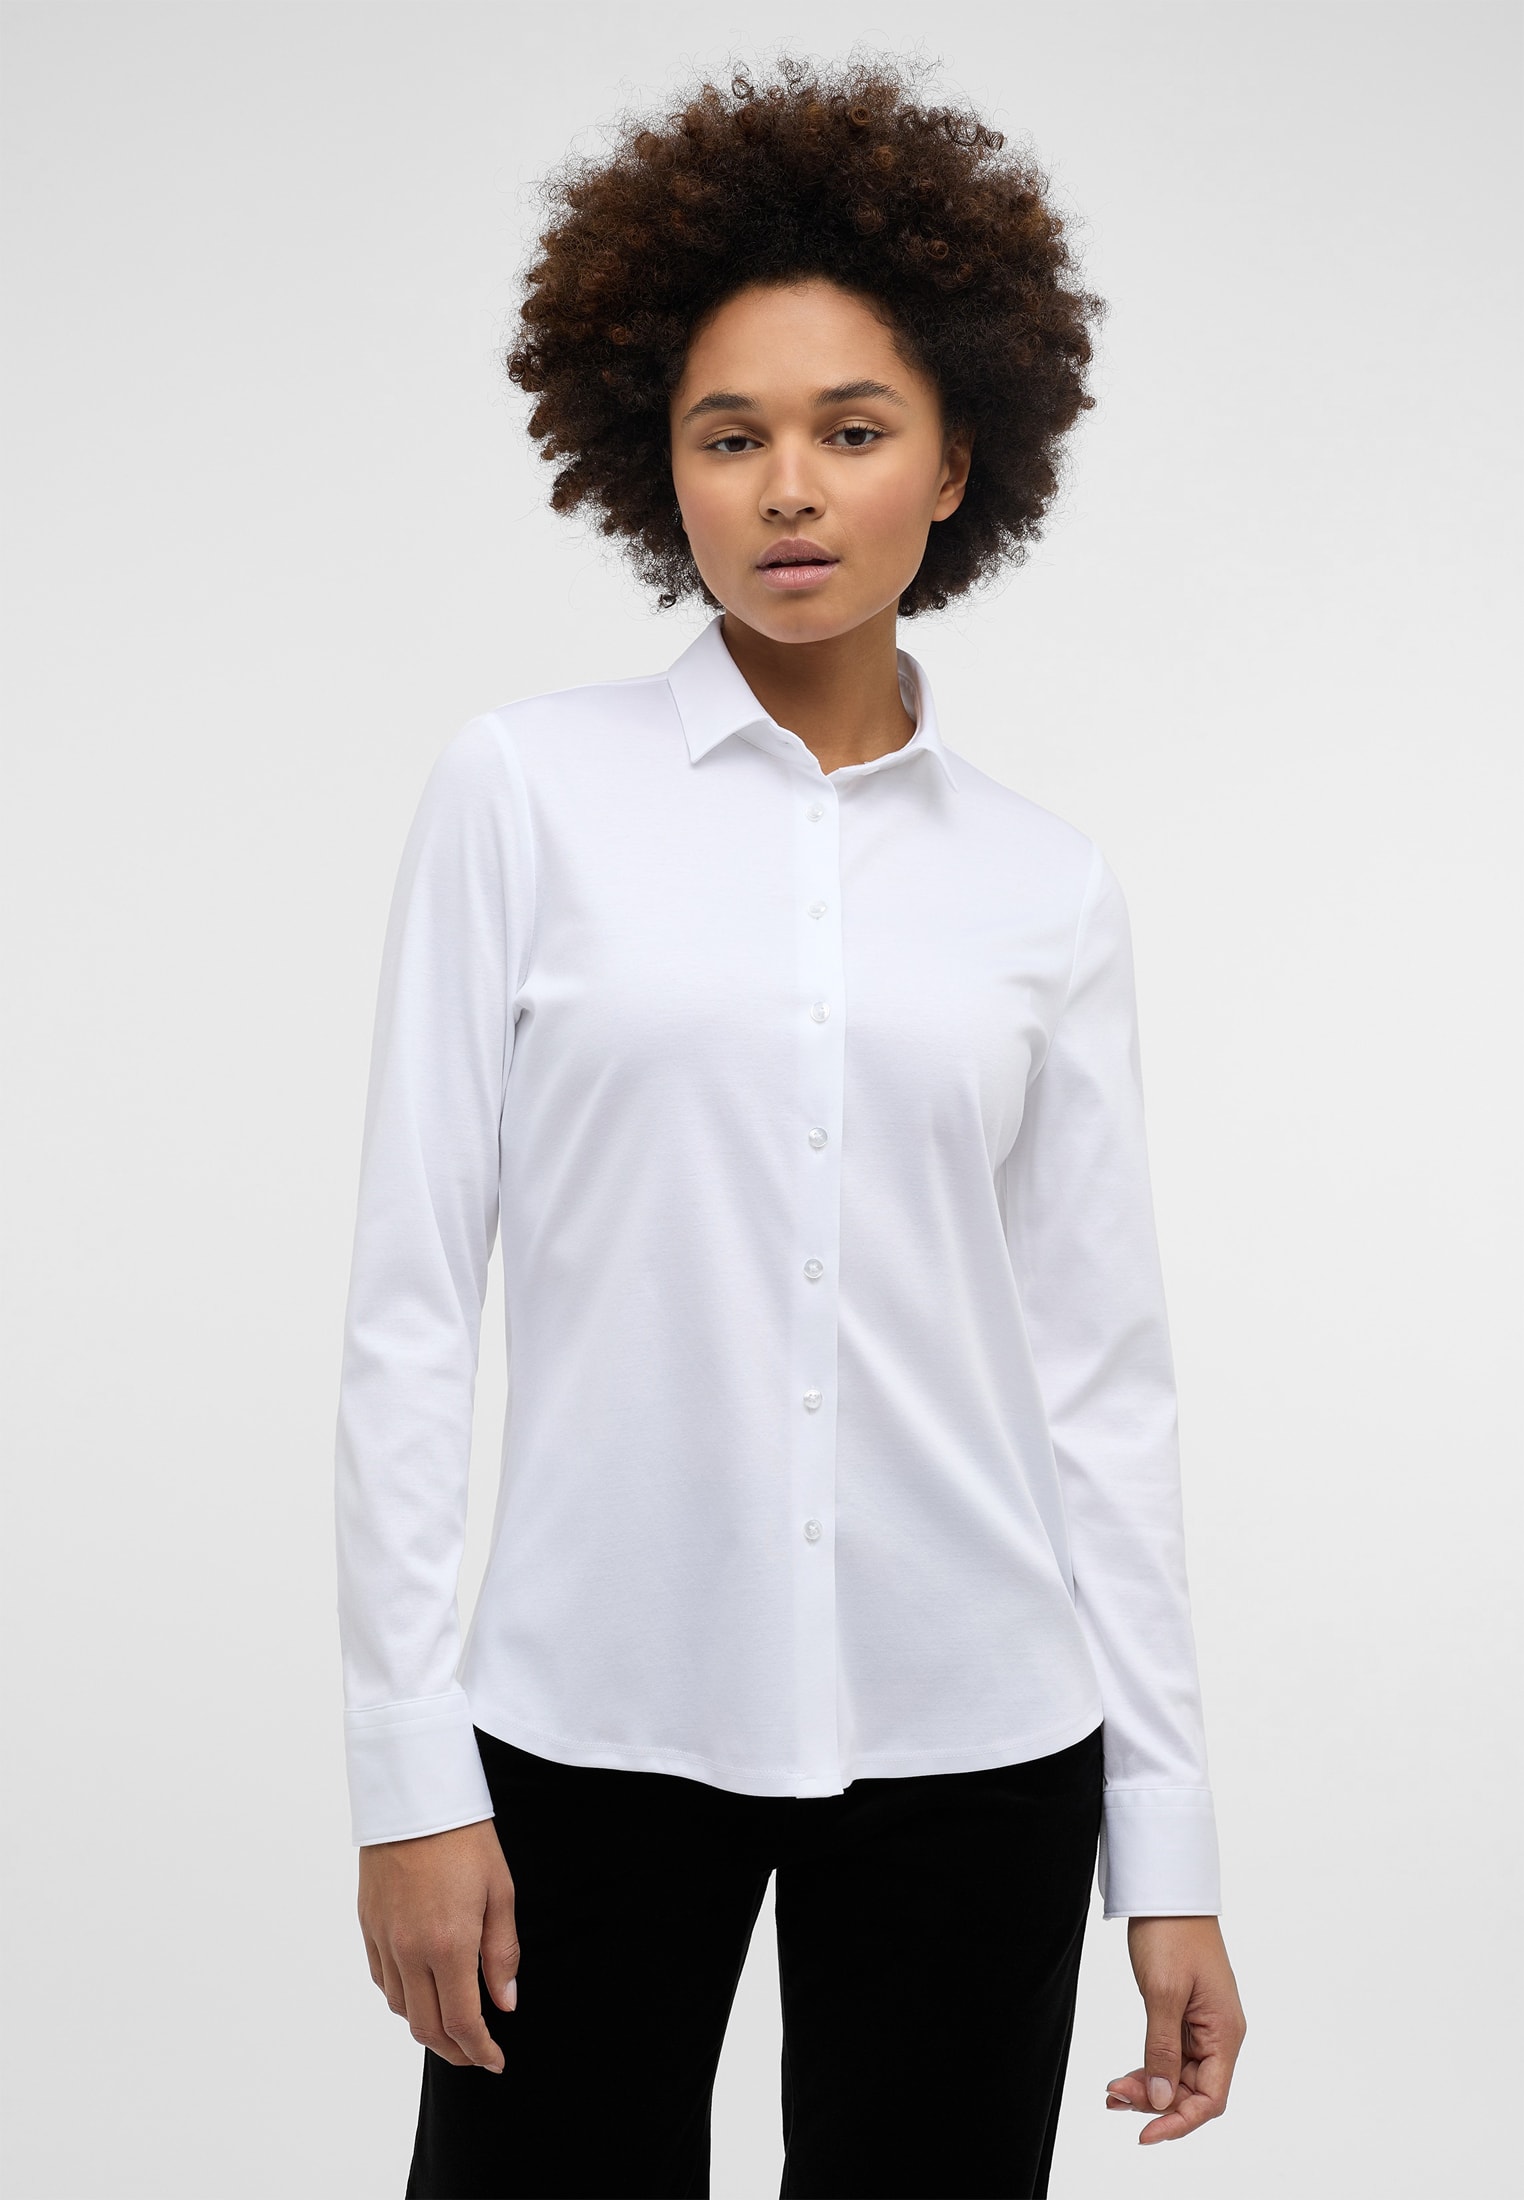 Jersey Shirt Blouse plain sleeve 2BL00229-00-01-42-1/1 | 42 long white in | | white 